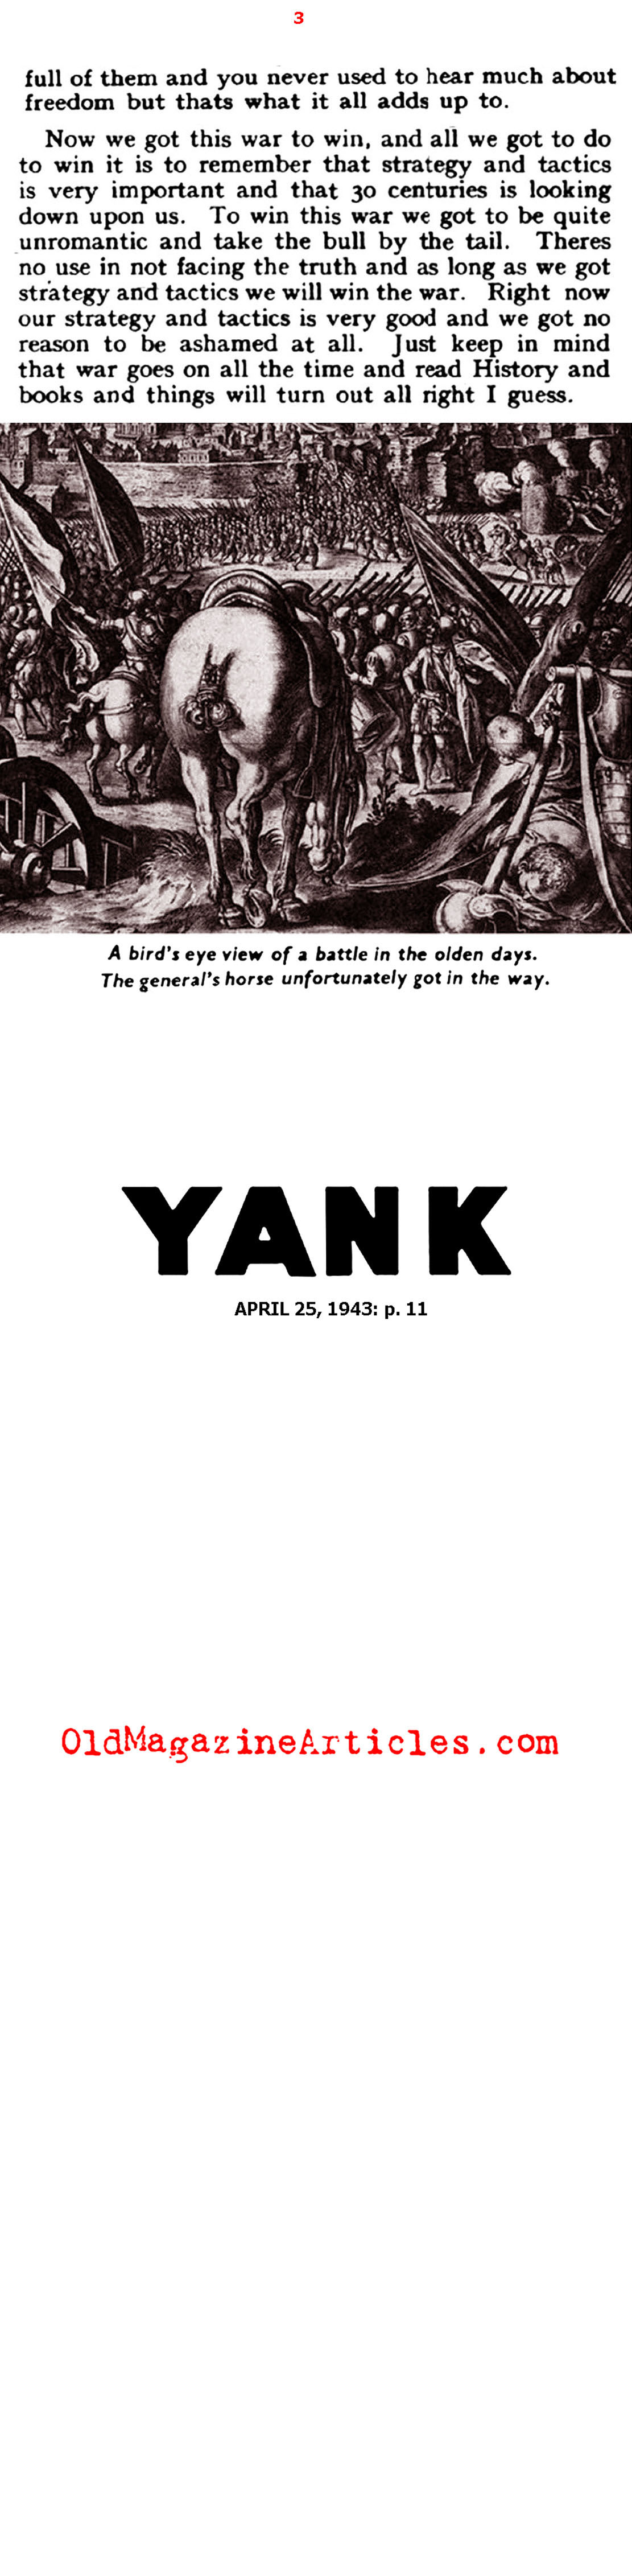 Humor in Uniform (Yank Magazine, 1943)